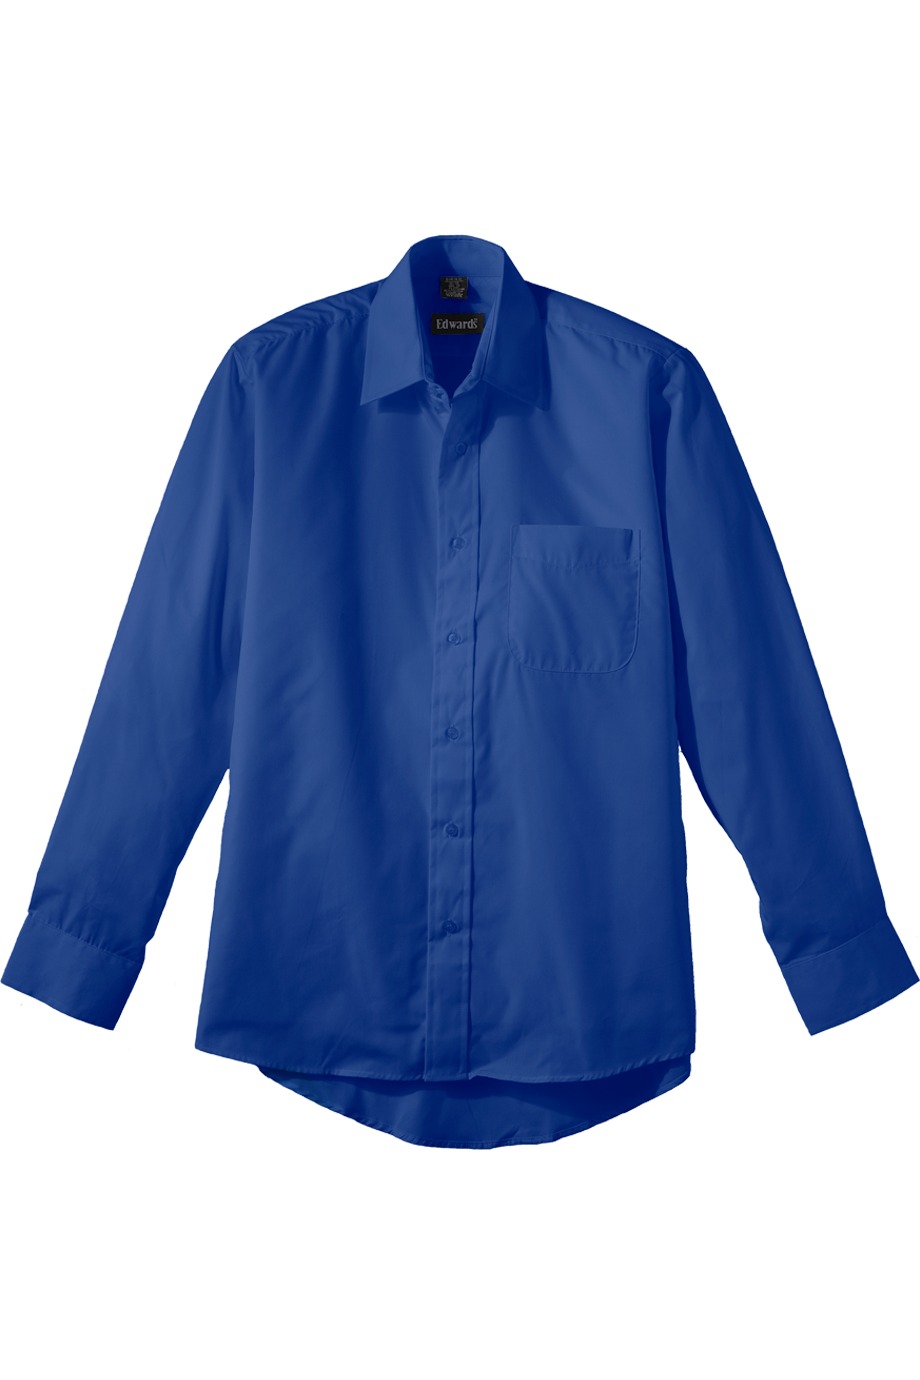 Edwards Garment 1363 - Men's Long Sleeve Value Broadcloth Shirt